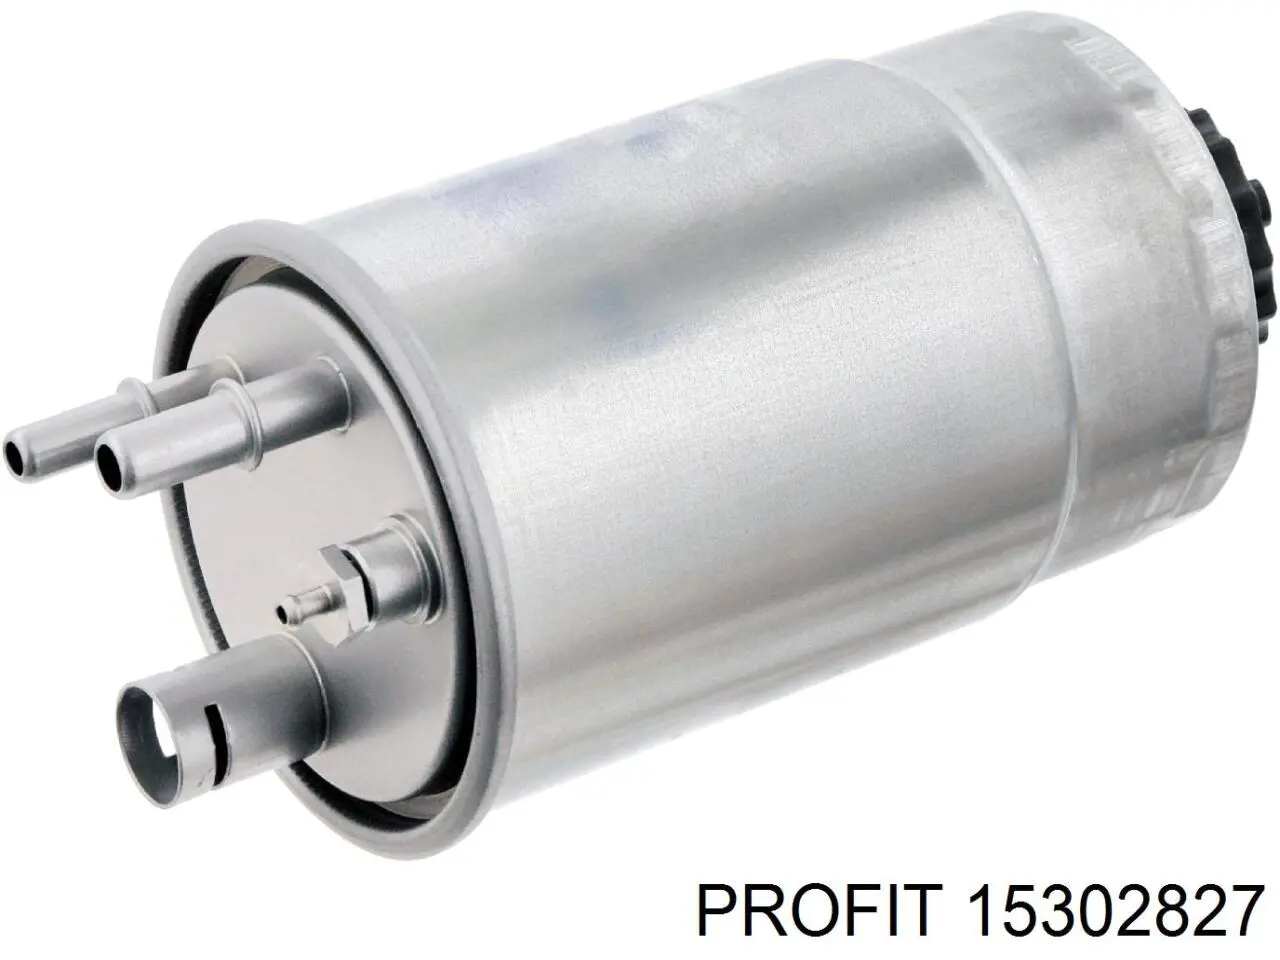 15302827 Profit filtro combustible